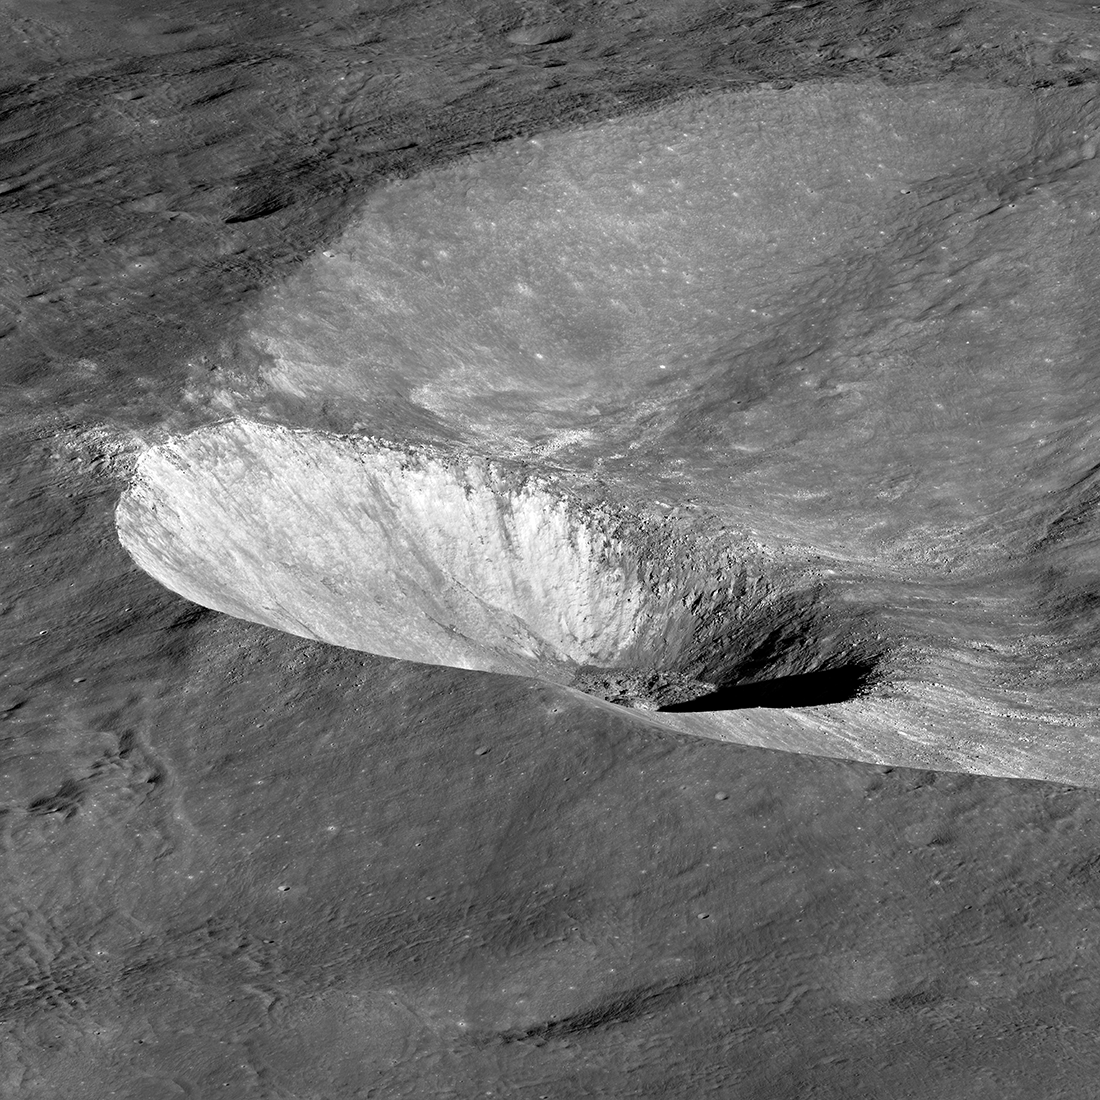 Hawke Crater